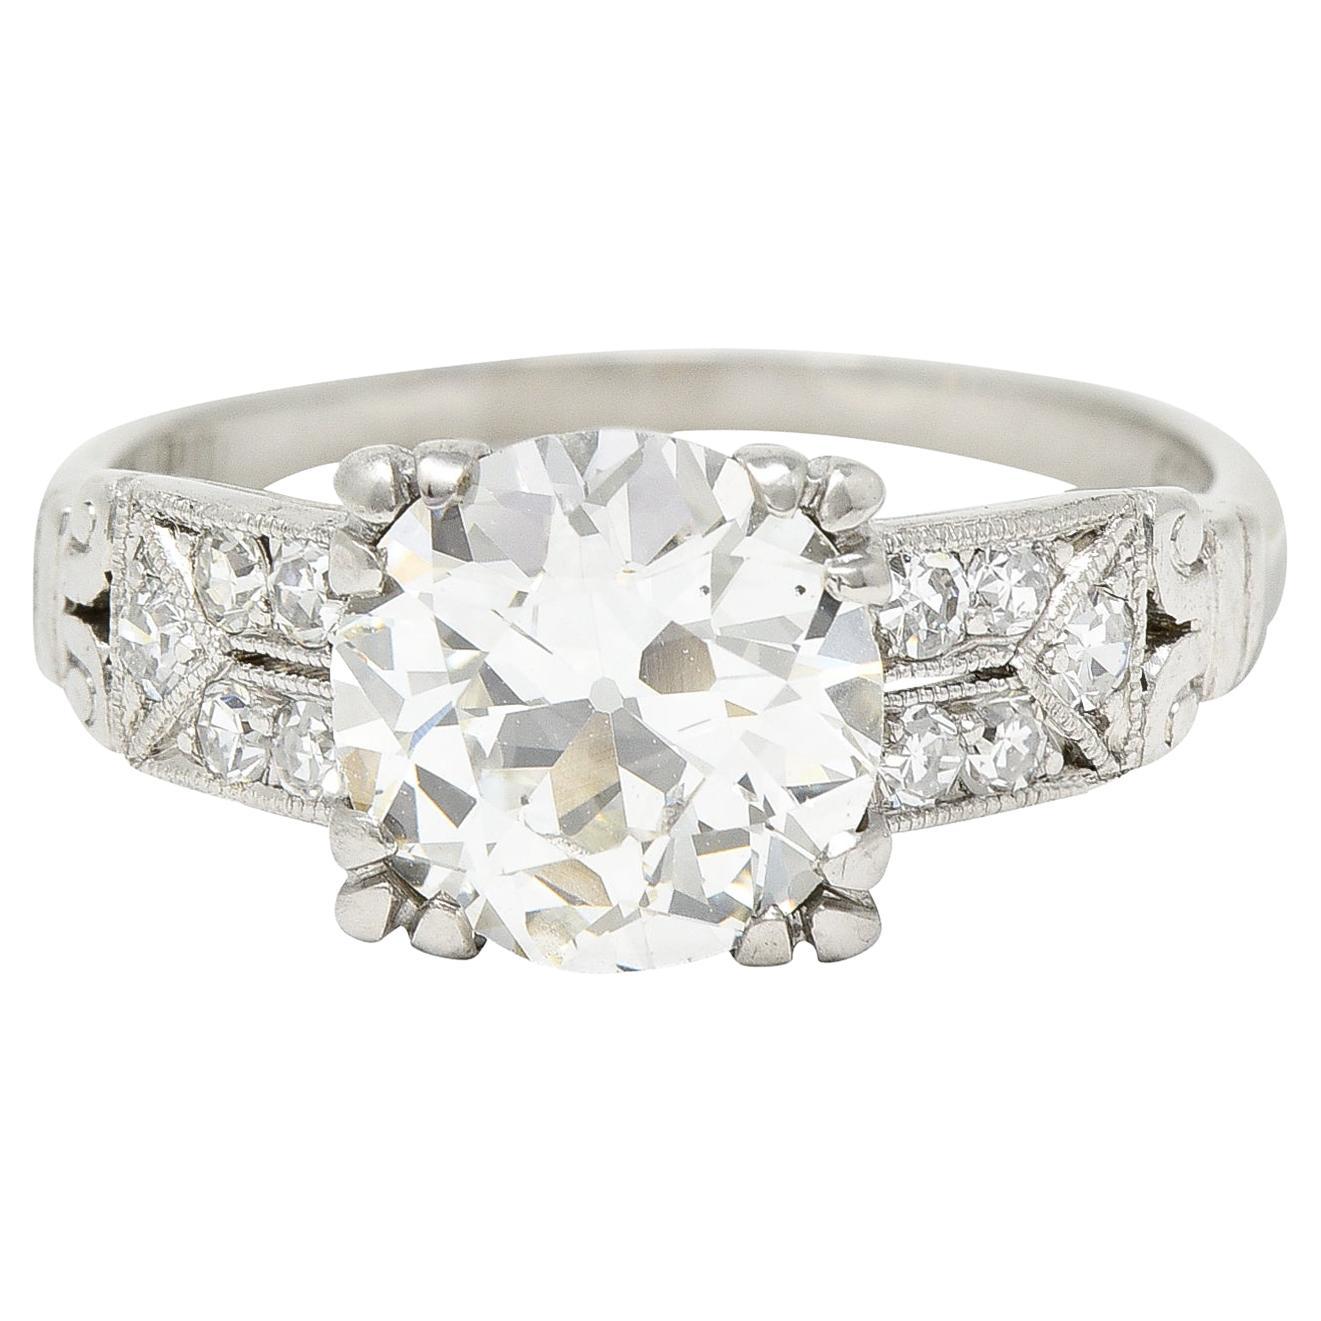 1930's Art Deco Old European 1.84 Carats Diamond Platinum Engagement Ring For Sale